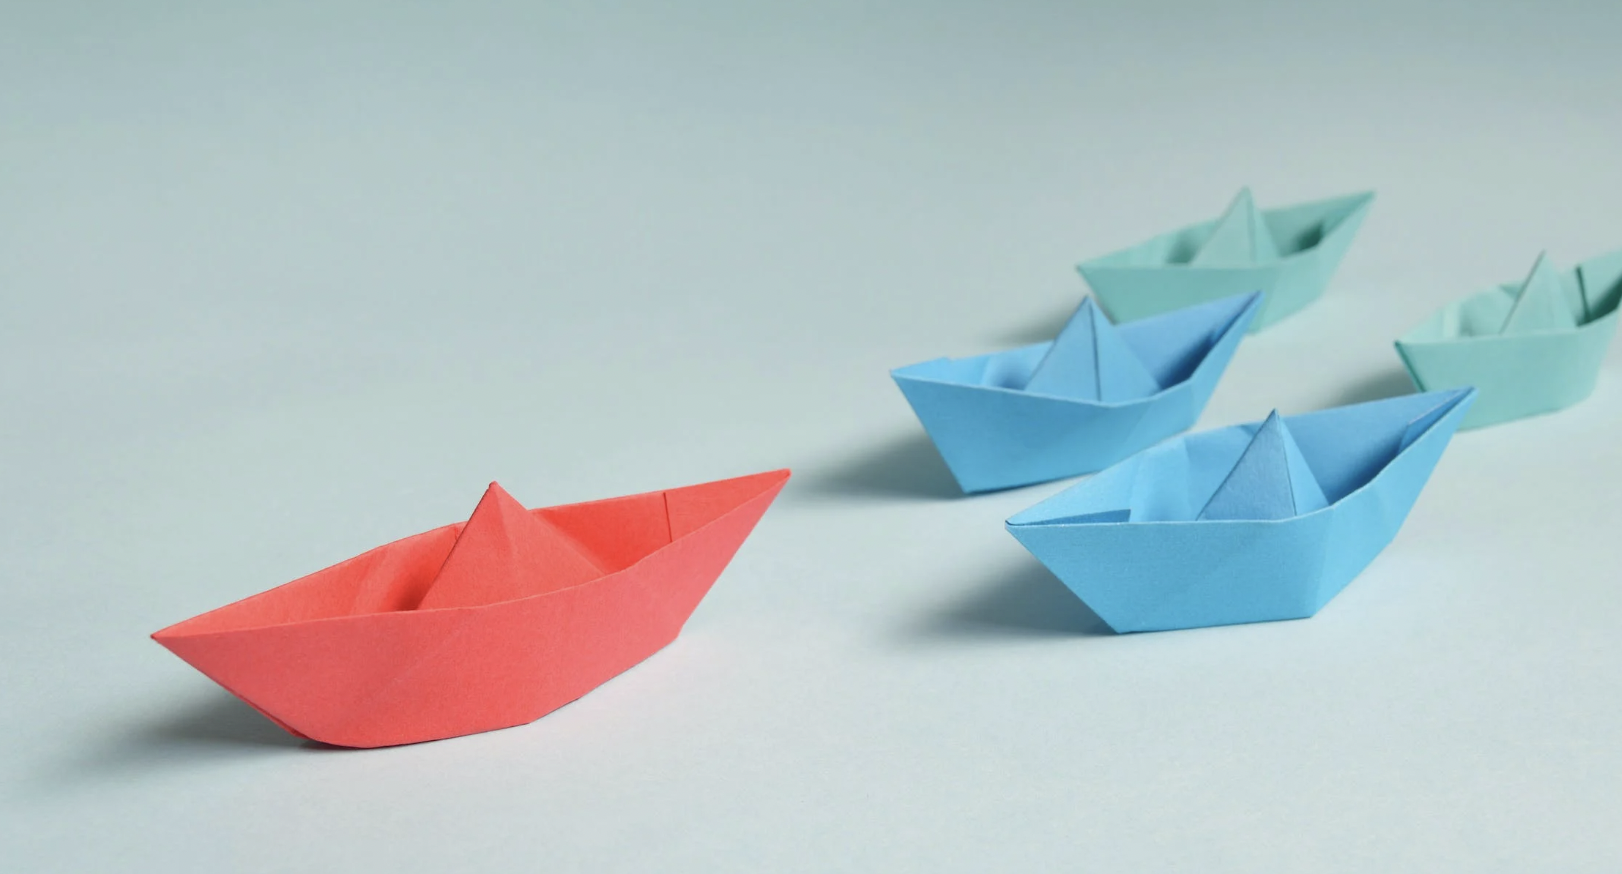 Paper ships of different colors representing good mentors.